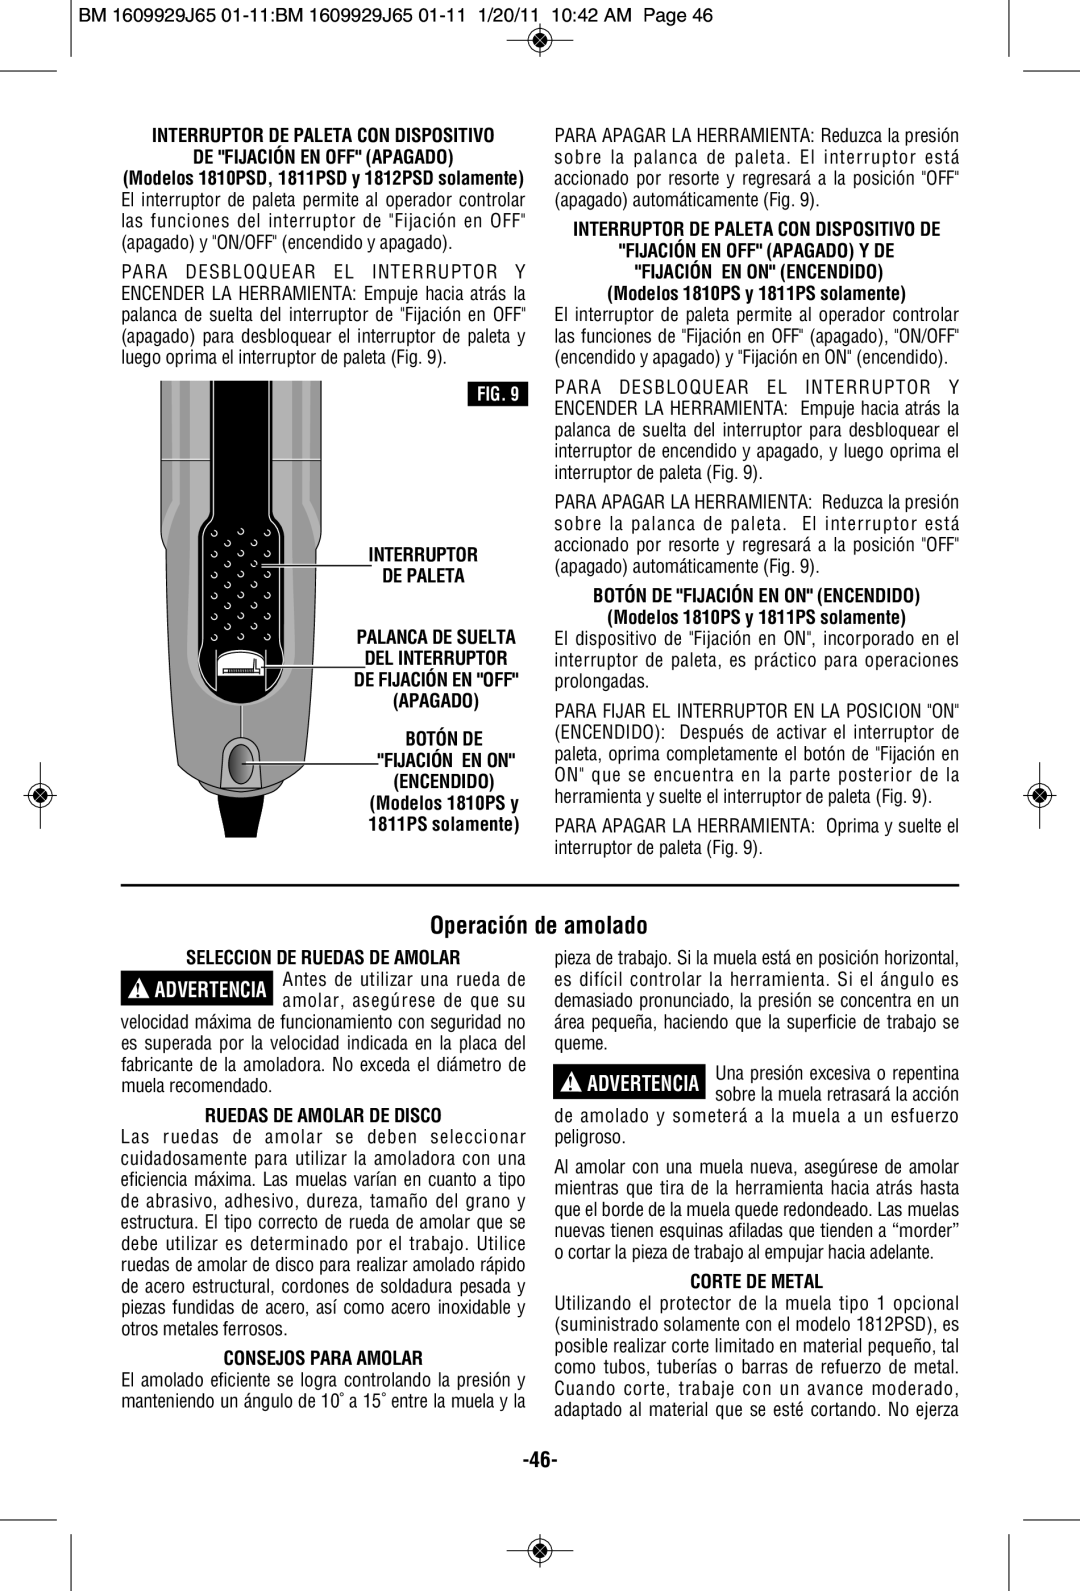 Bosch Power Tools 1811PSD, 1812PSD manual Operación de amolado, De Fijación En Off Apagado, Interruptor De Paleta, Botón De 